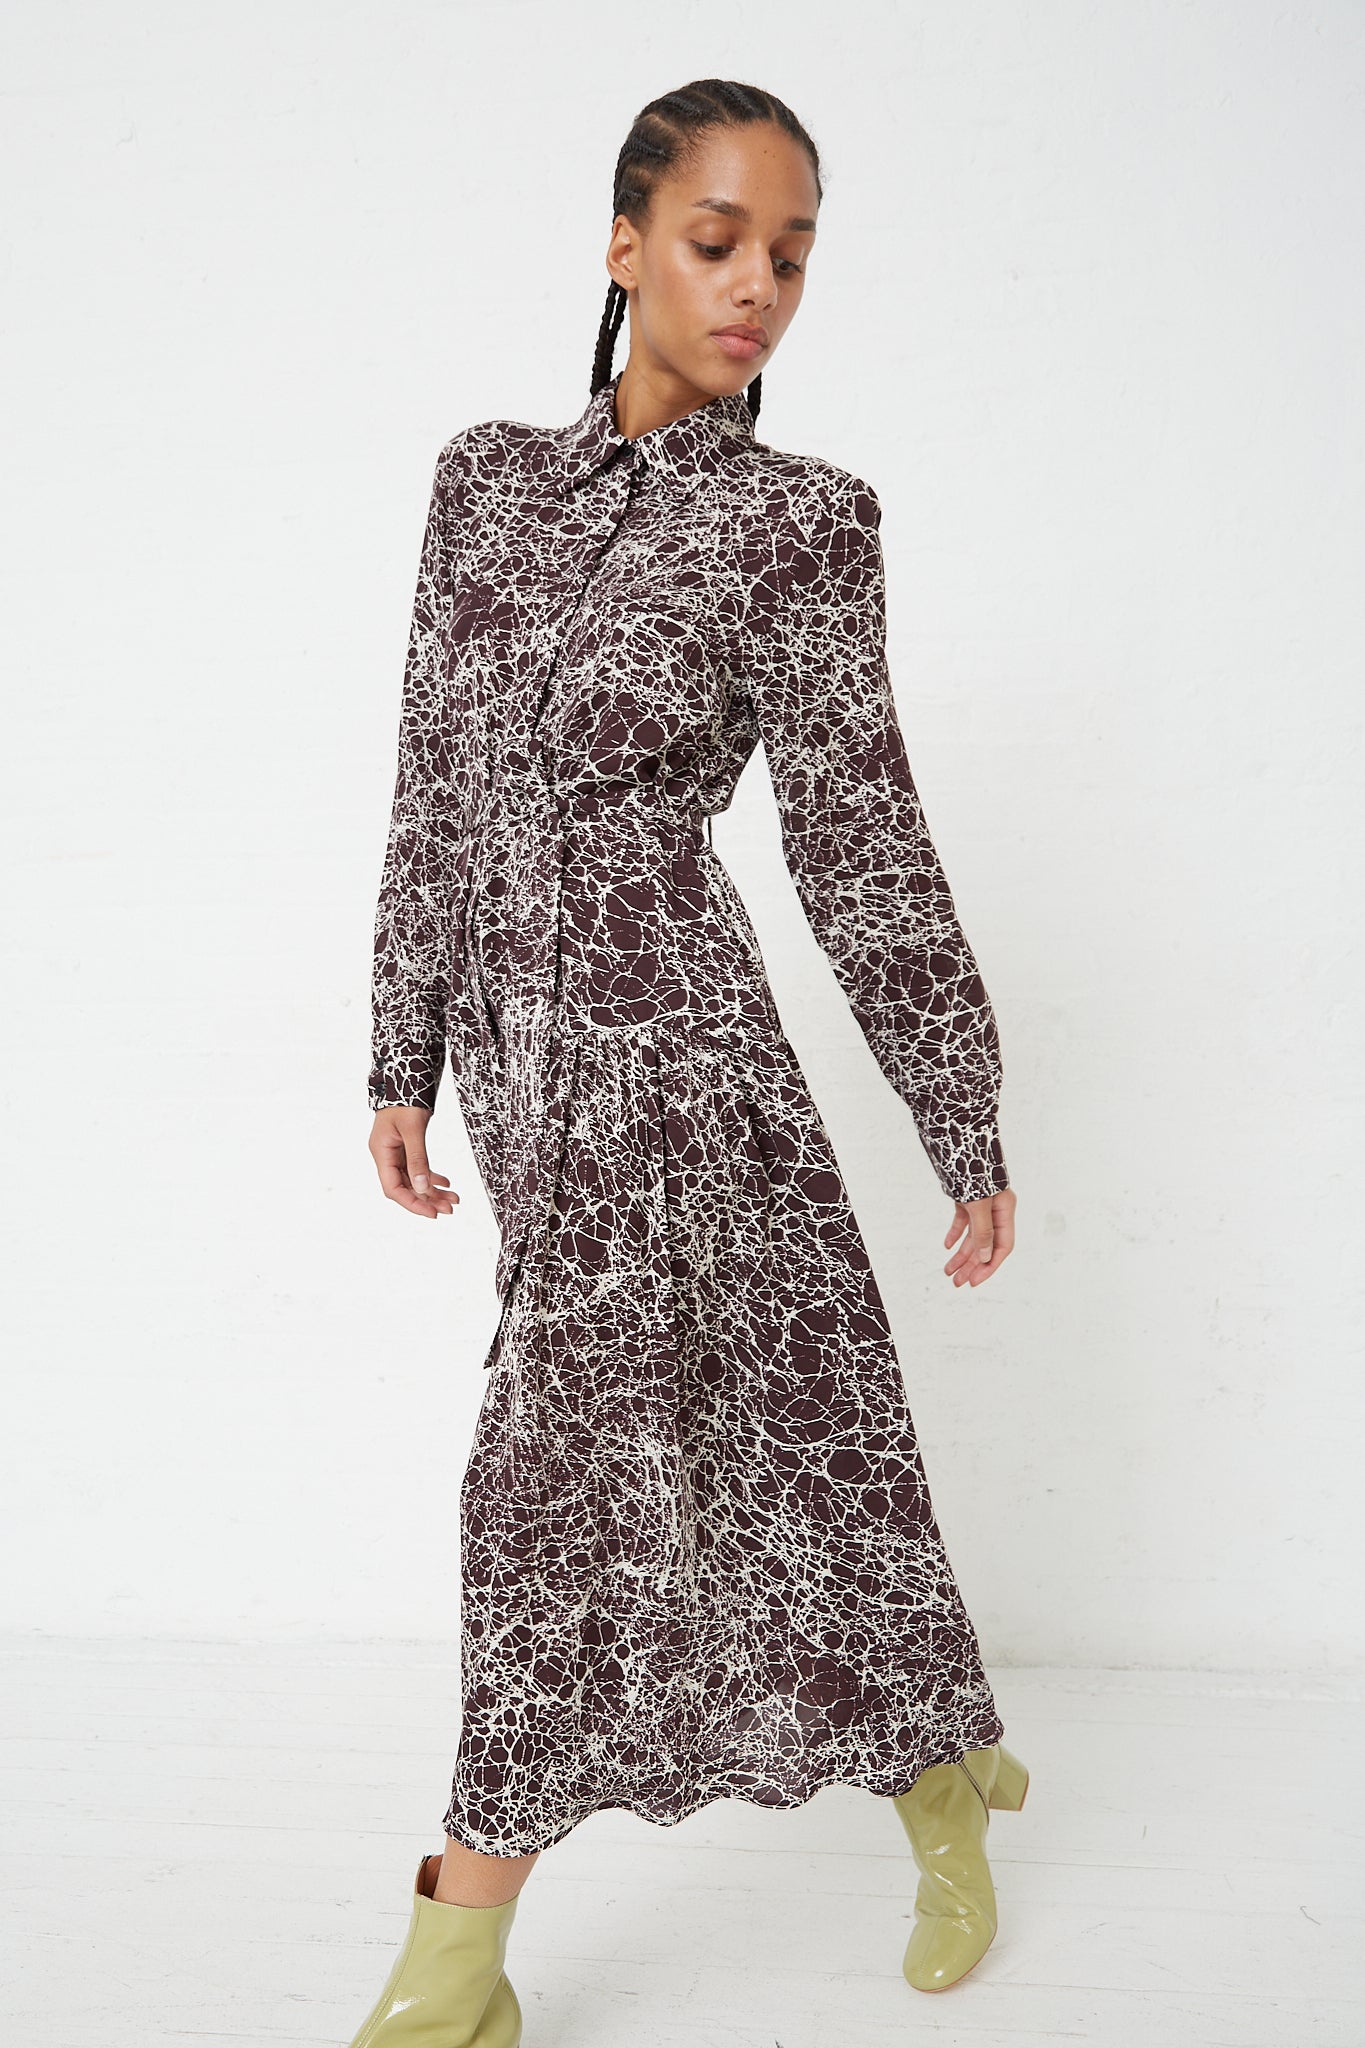 The model is wearing a long-sleeved Silk Marbled Georgette Jana Dress in Brown by Rachel Comey.